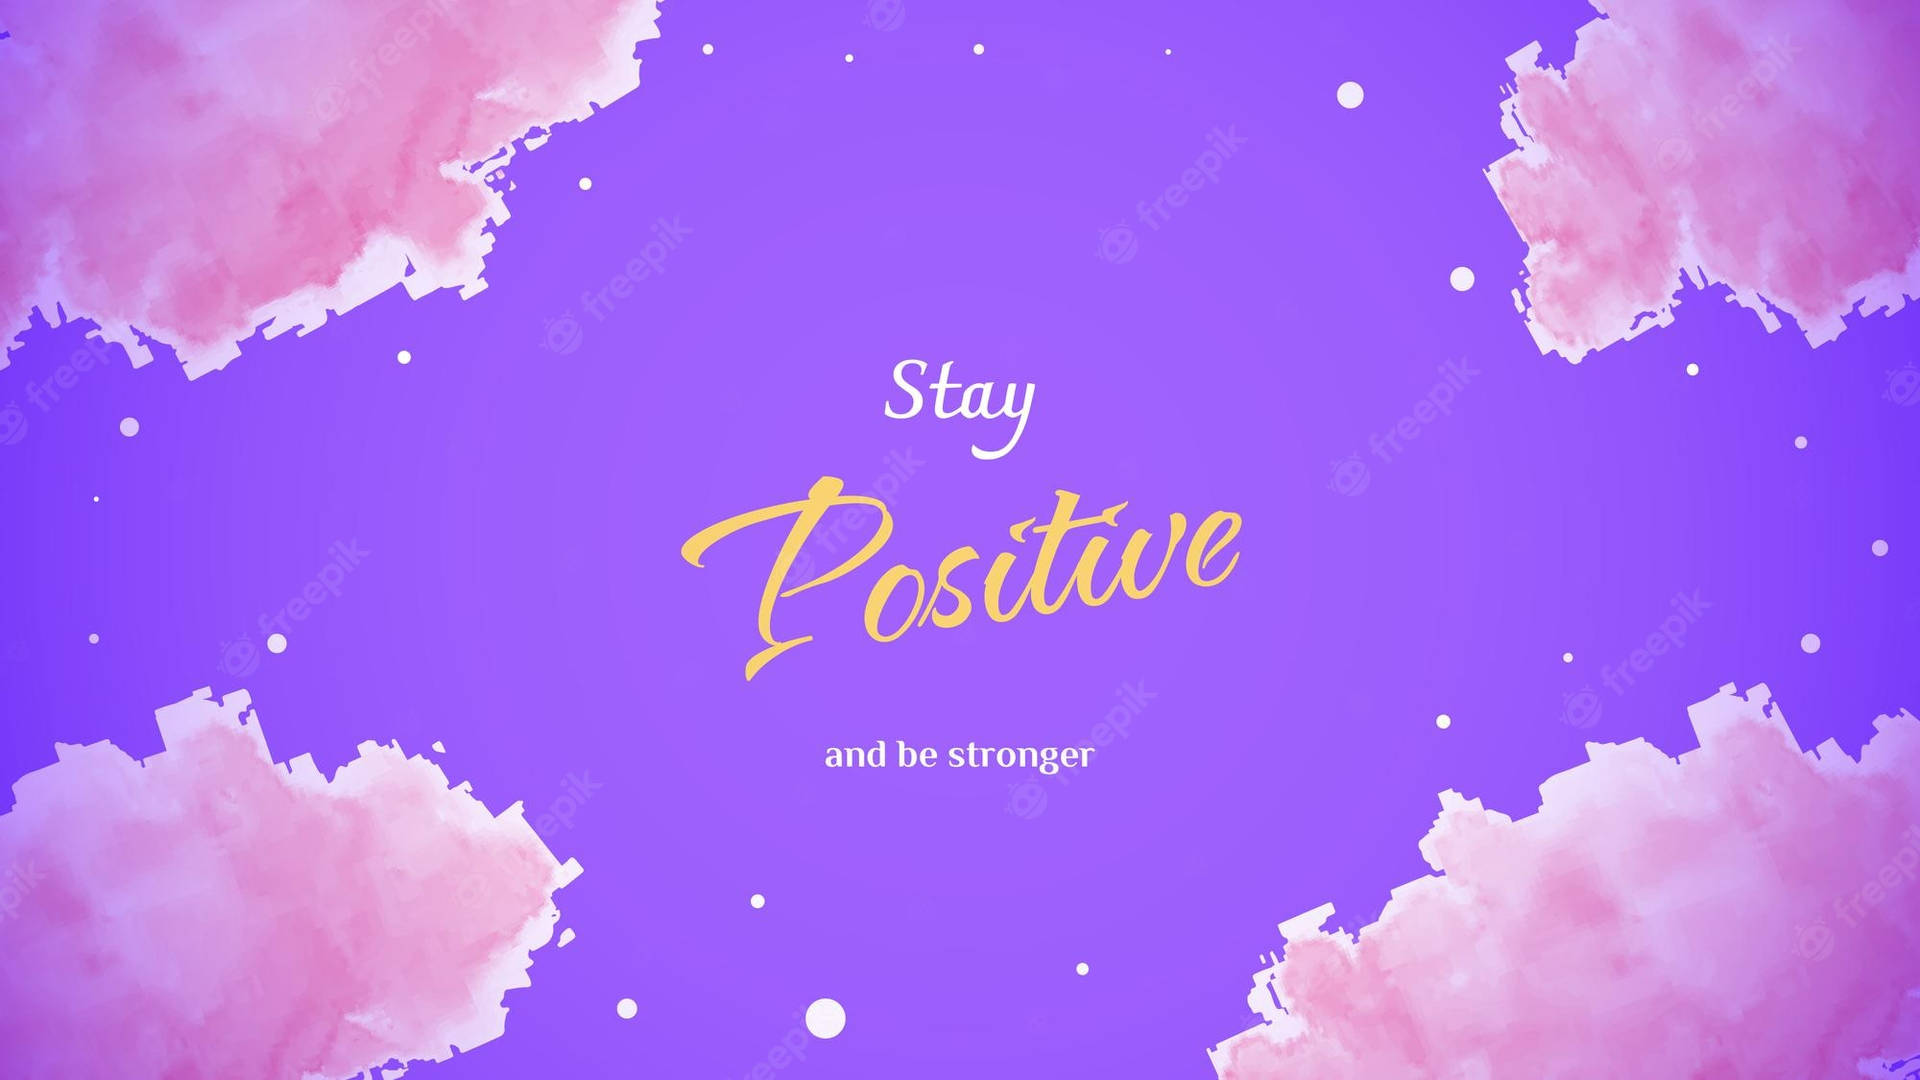 Söttjejig Stay Positive. Wallpaper